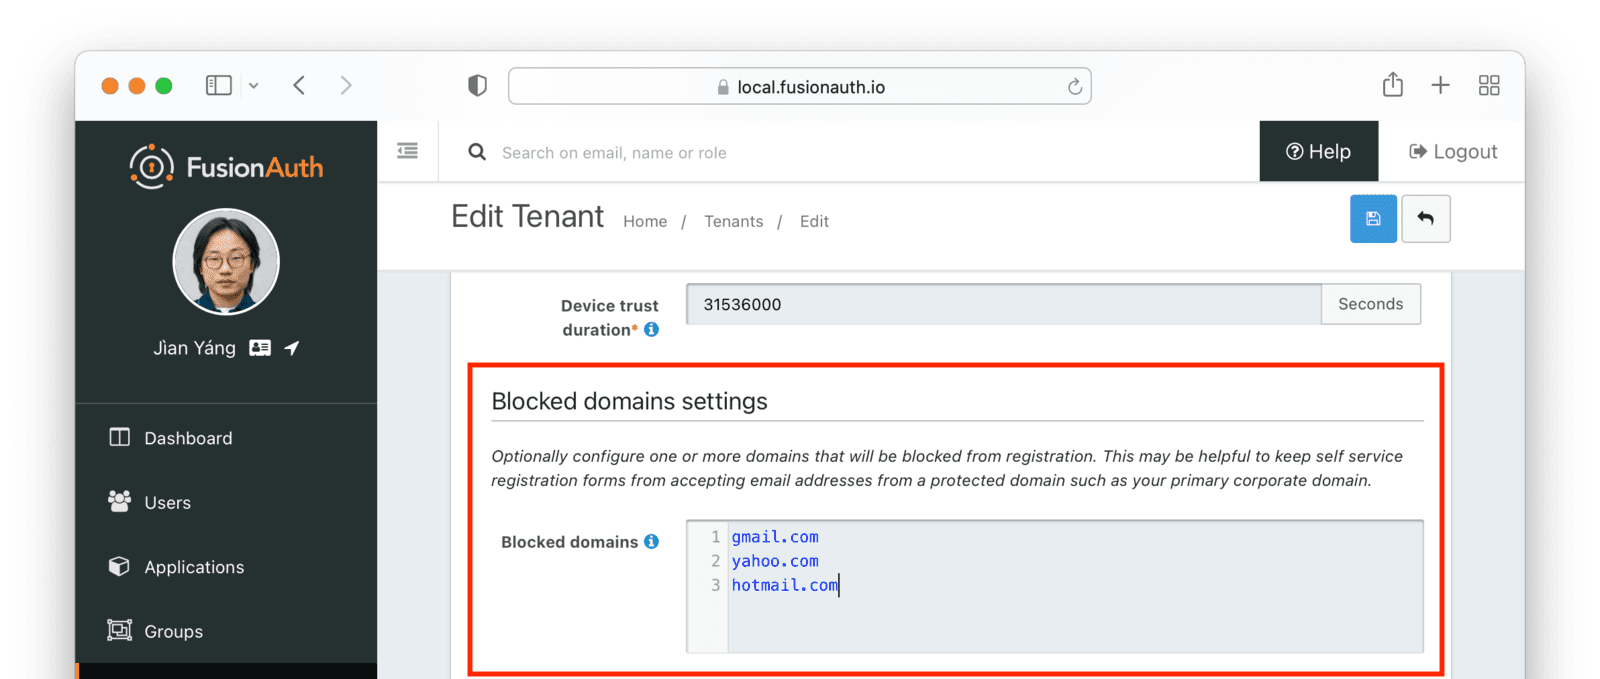 Blocking consumer facing domains from registering.